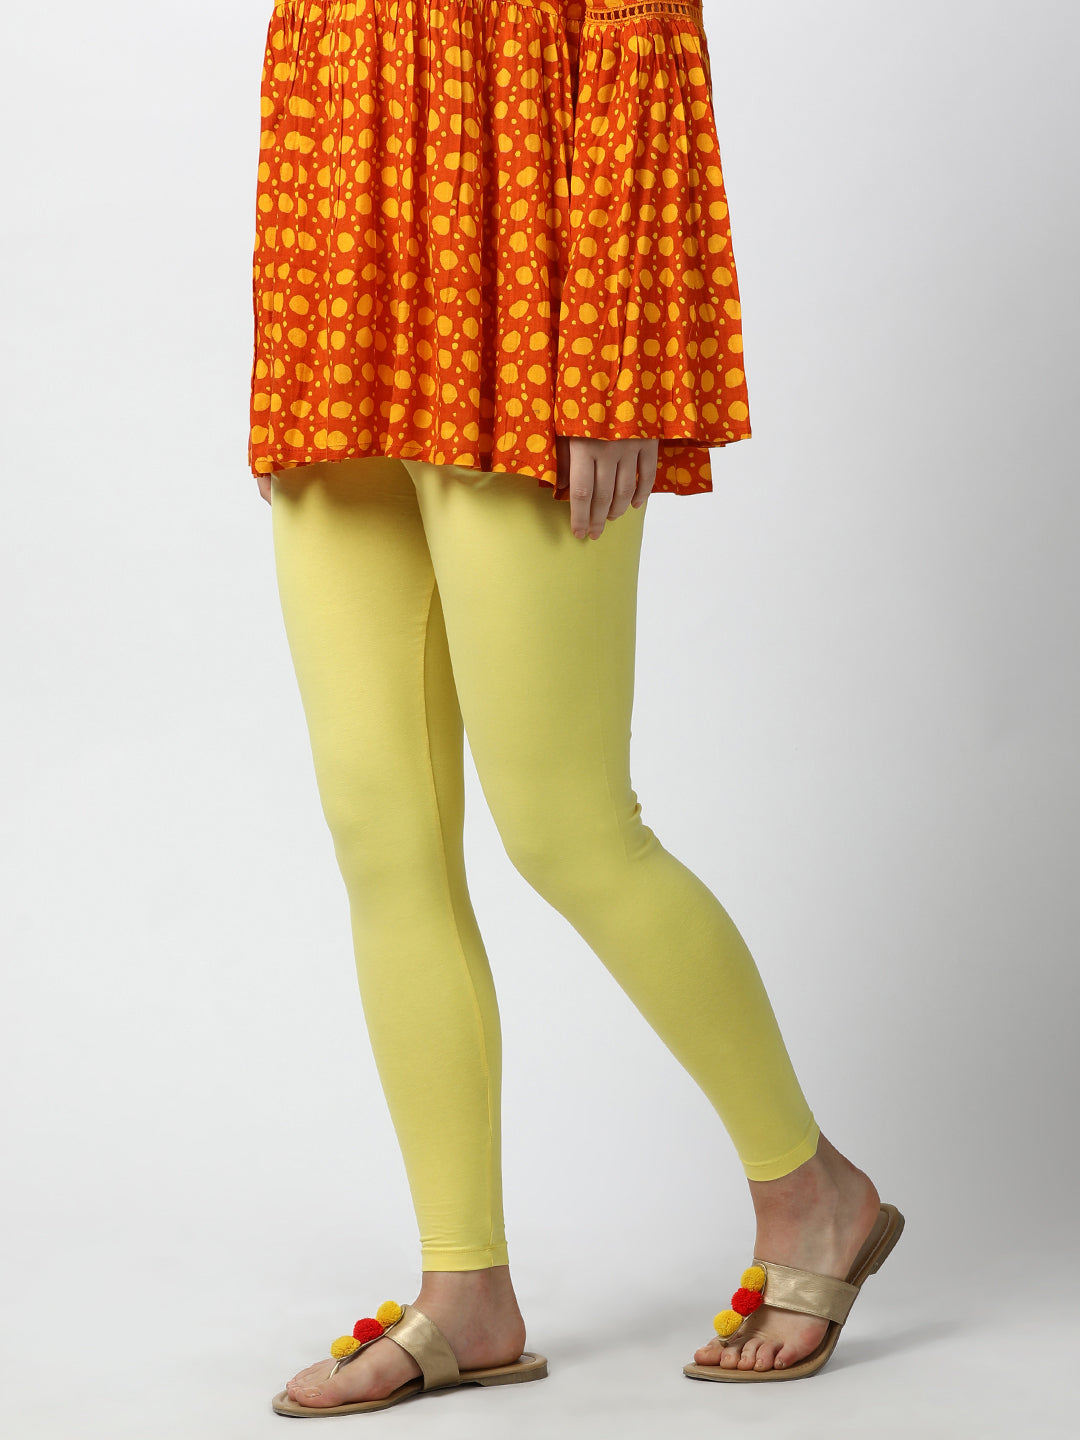 Yellow Leggings for Women | Shop Mid-rise & High-waisted | Aritzia US